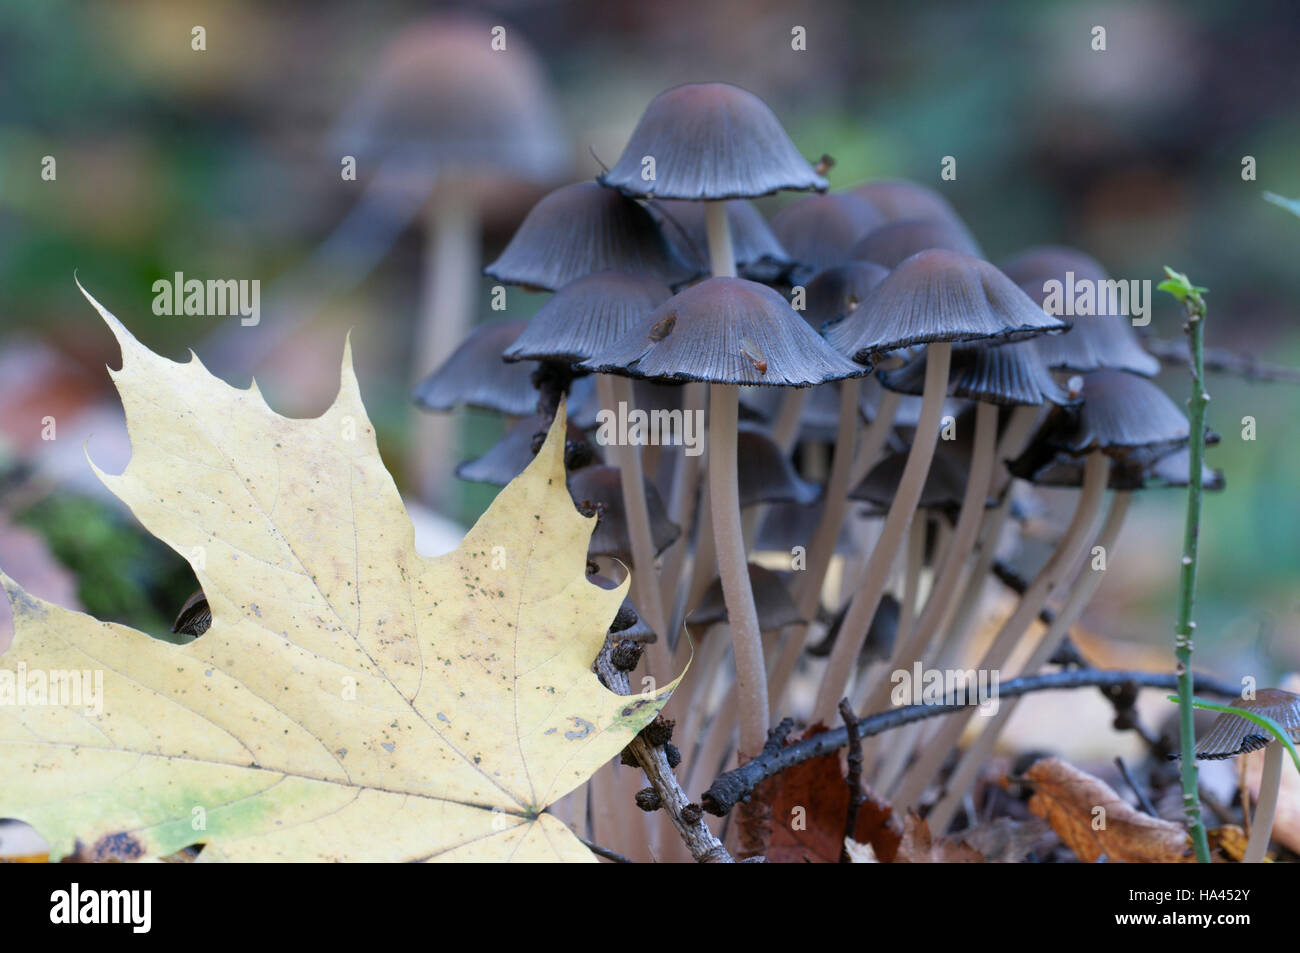 Coprinus atramentarius mushrooms, close up shot Stock Photo